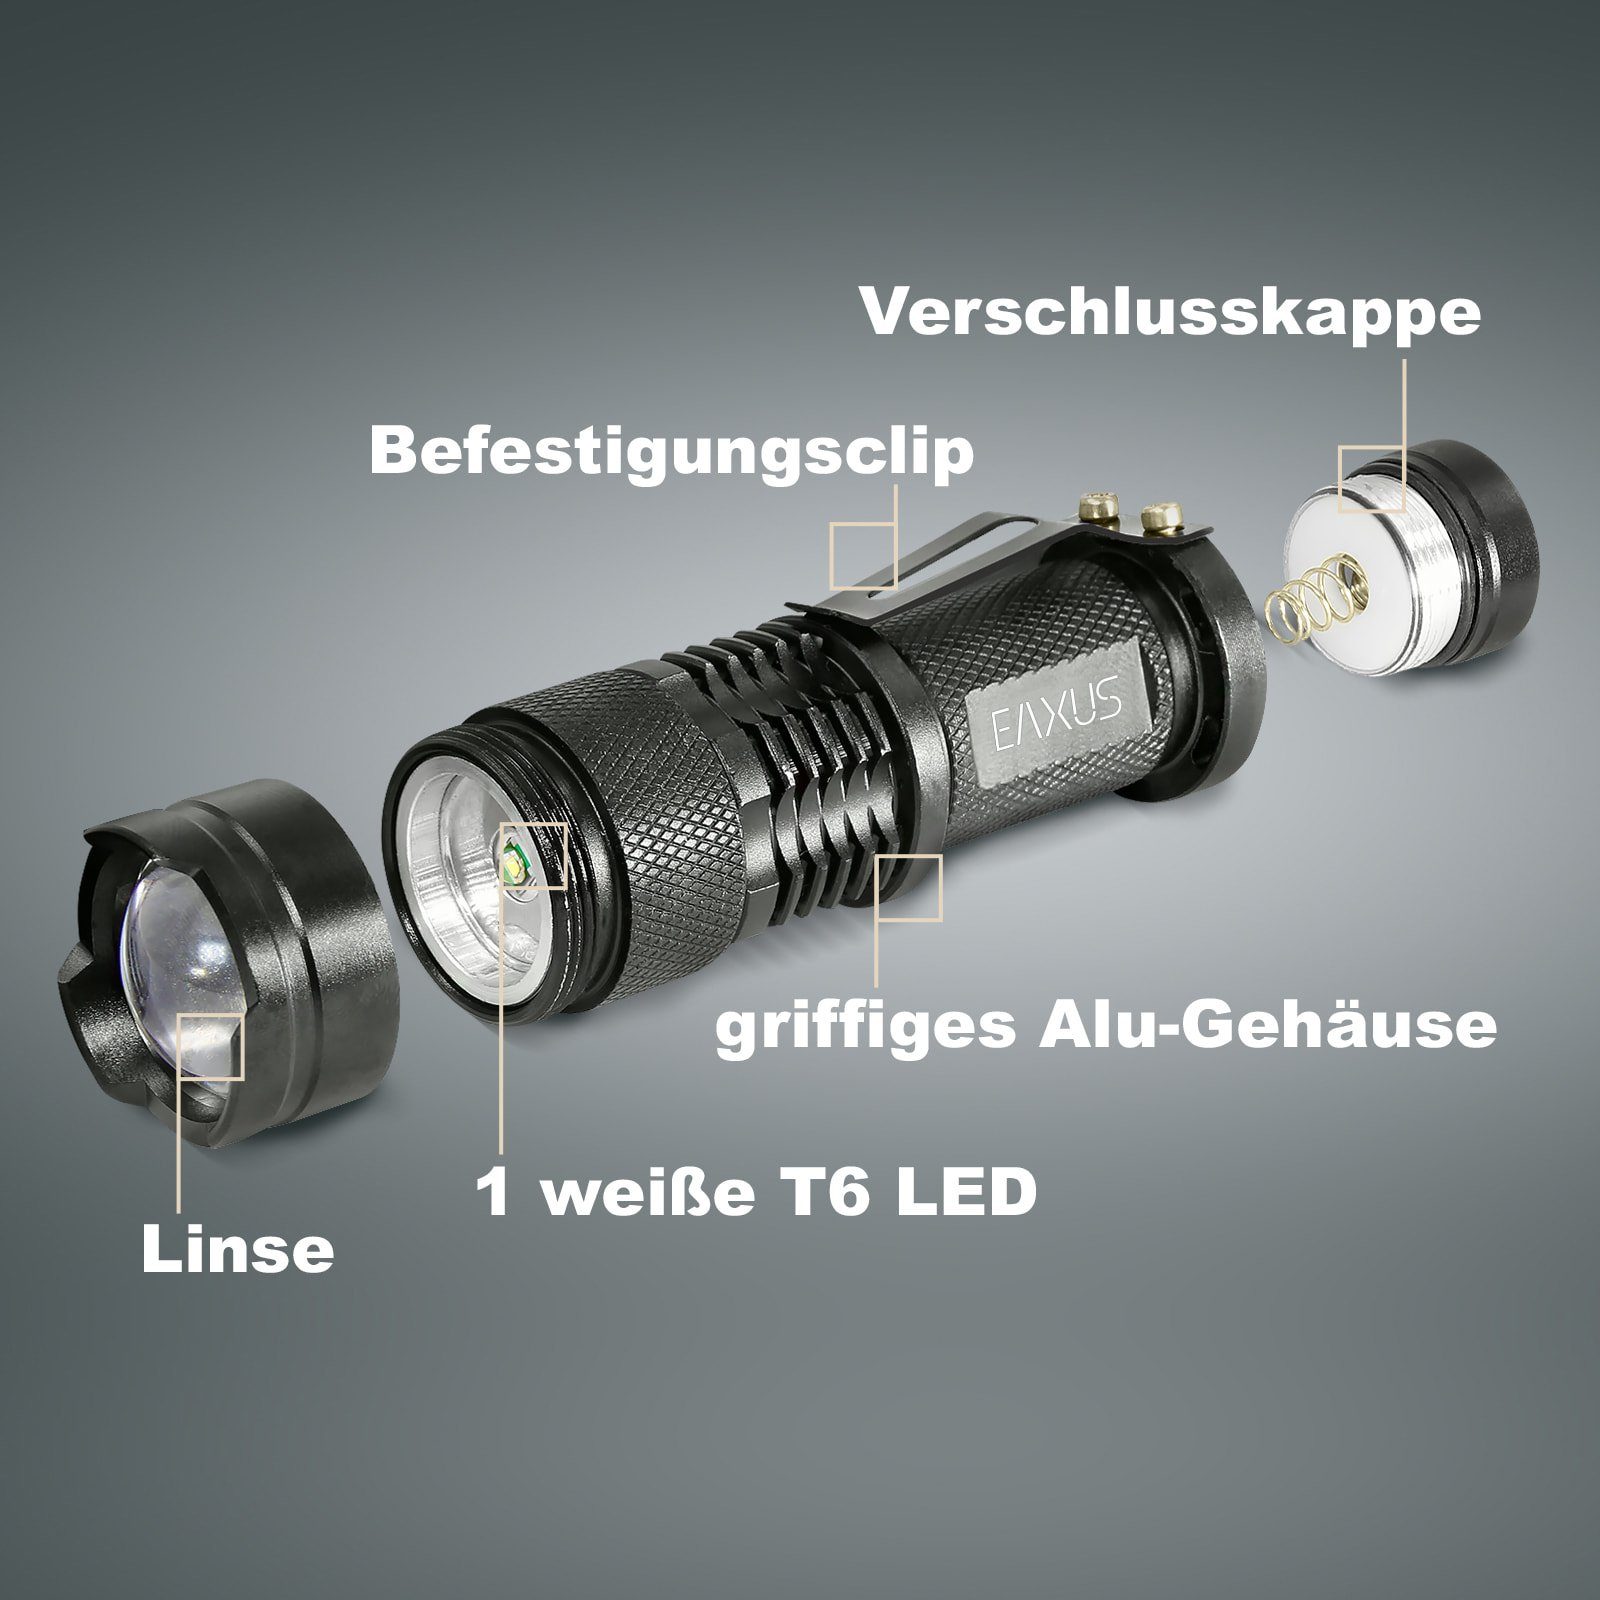 EAXUS LED Taschenlampe Leuchtmodi, Profi Glow-X Blink-Funktion, Zoom-Funktion mit Clip (1-St), Taschenlampe zur 3 Minitaschenlampe Clip Befestigung, mit